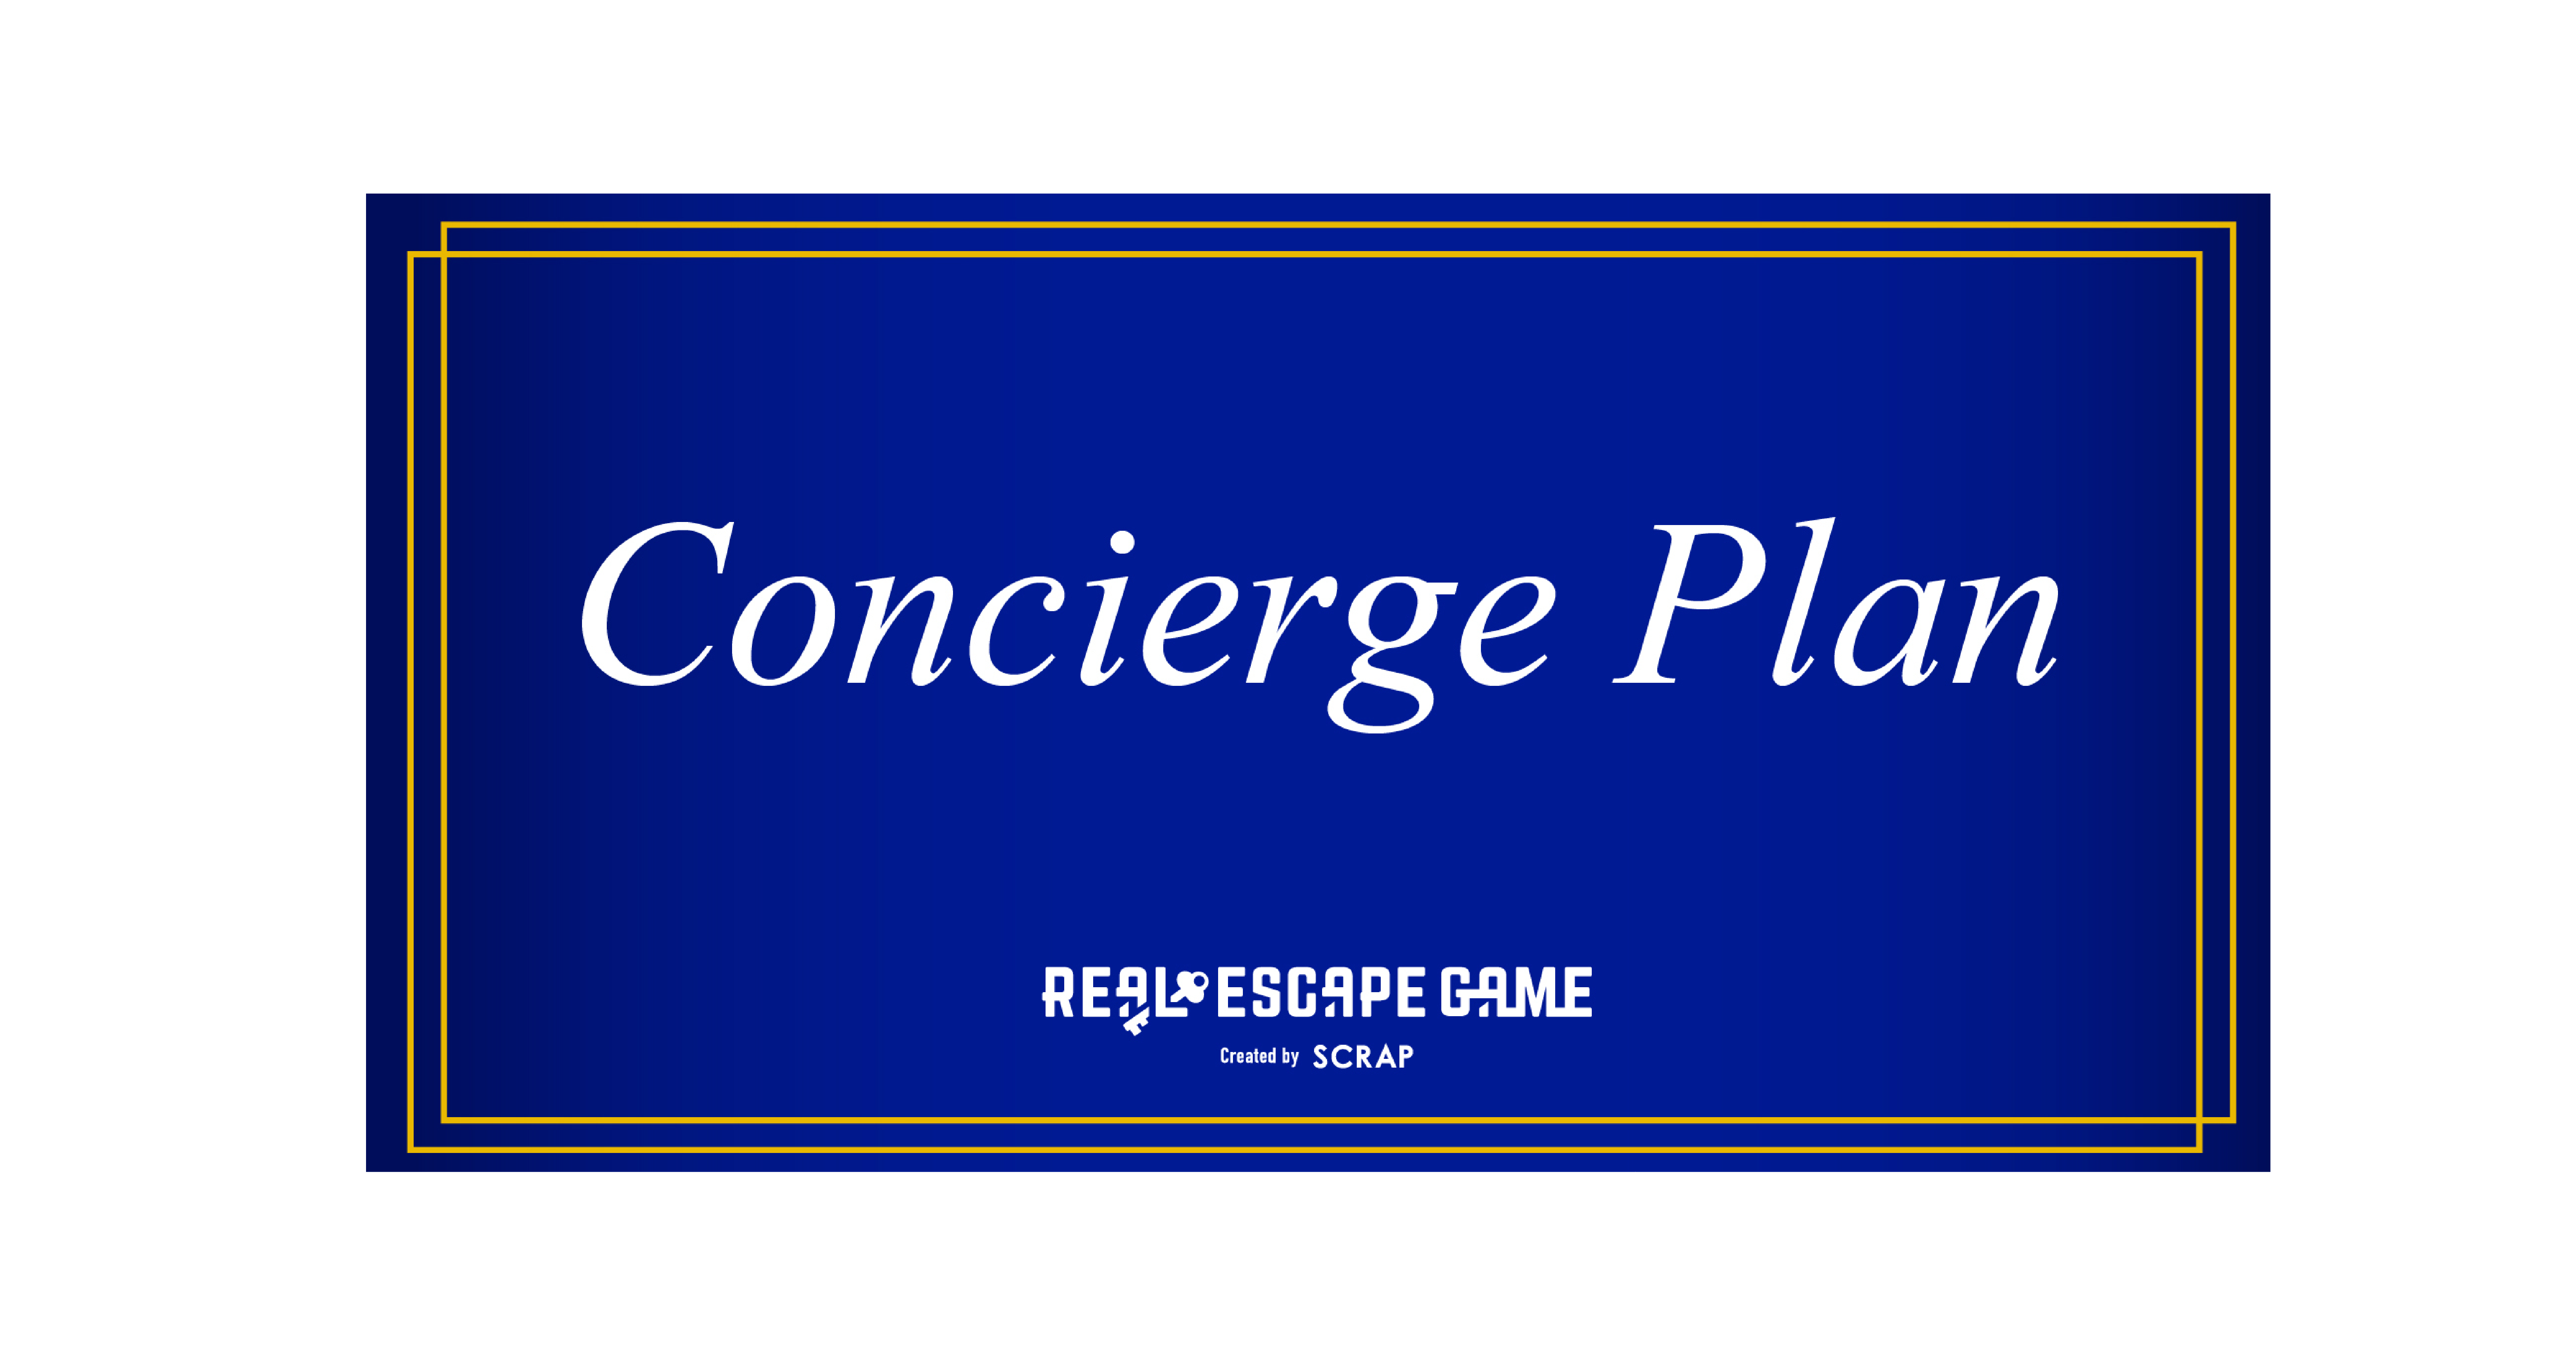 SCRAP's Concierge Plan